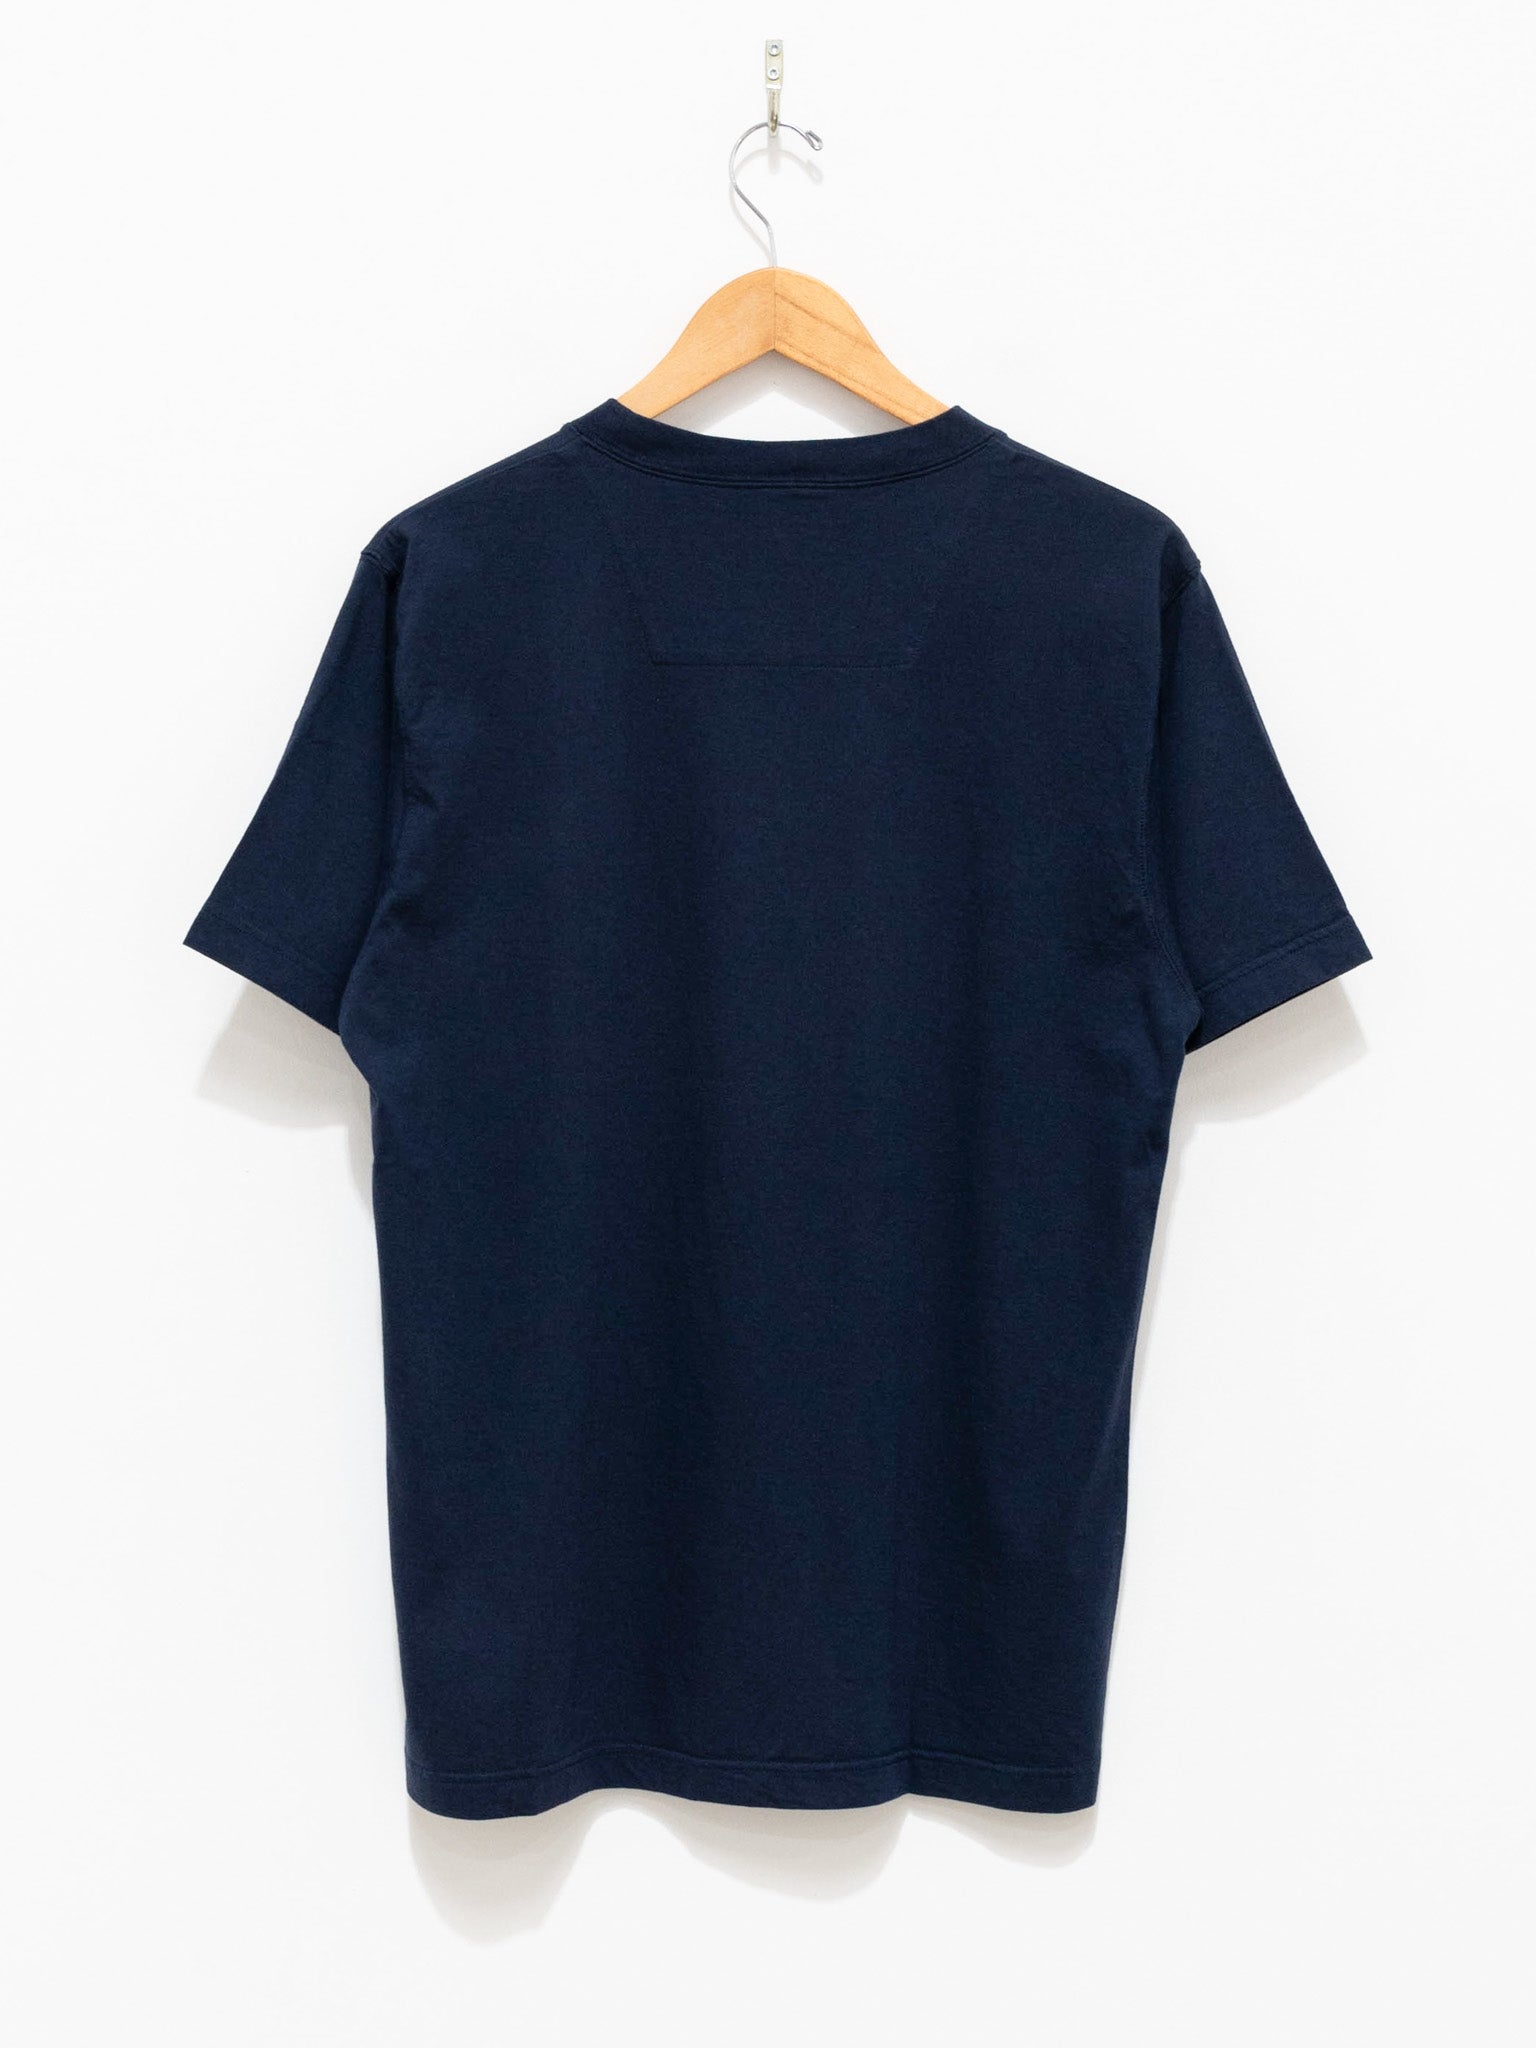 Namu Shop - ts(s) High Gauge Jersey Crewneck T-Shirt - Navy